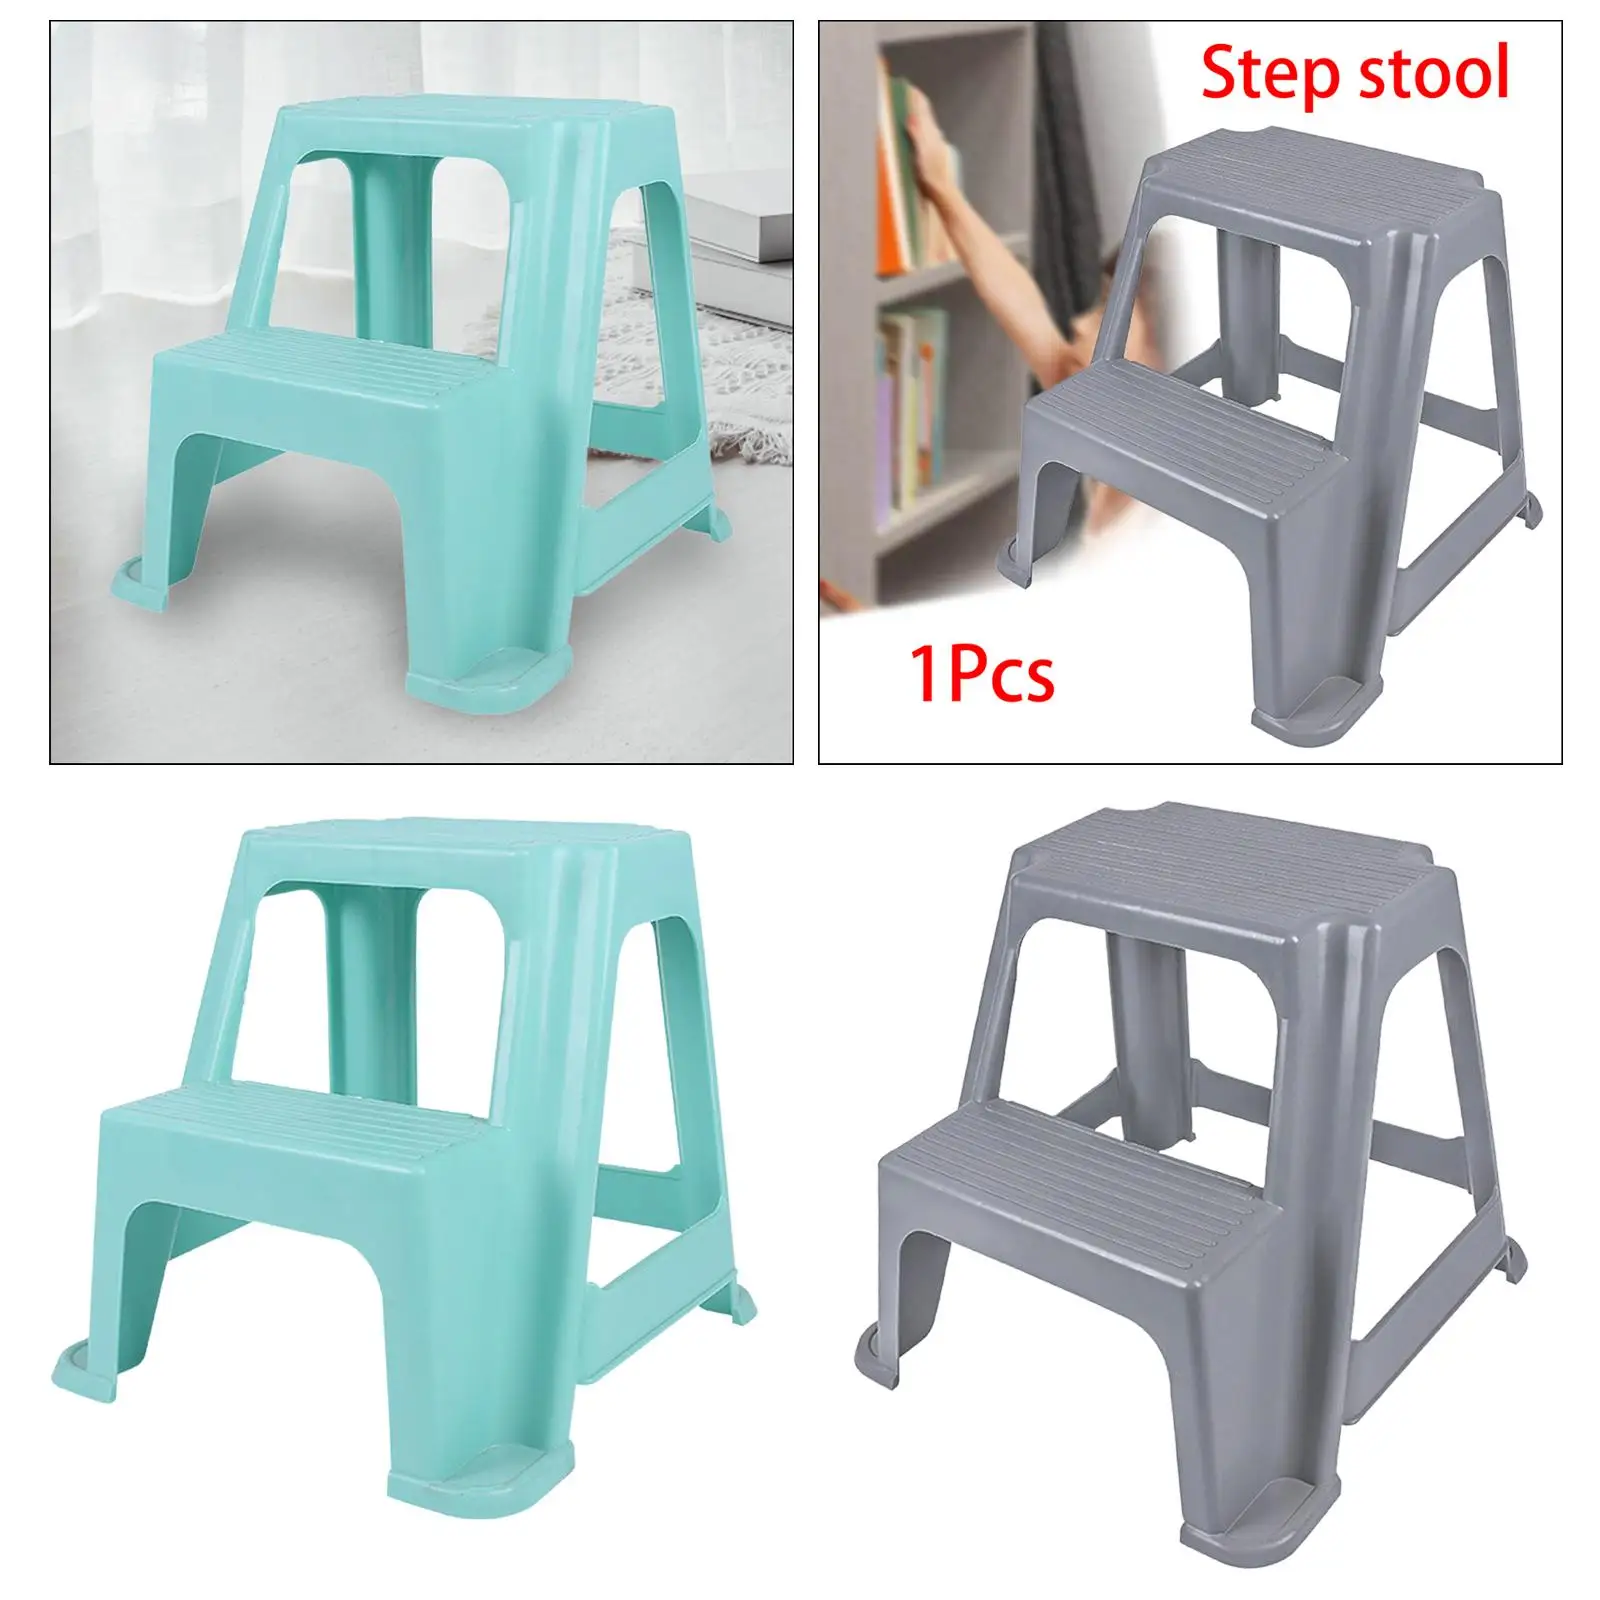 2 Step Stool Anti Slip Lightweight Stepping Stool Toilet Stool Two Step Stool Stepstool for Kids Seniors Adults Pets Bathroom